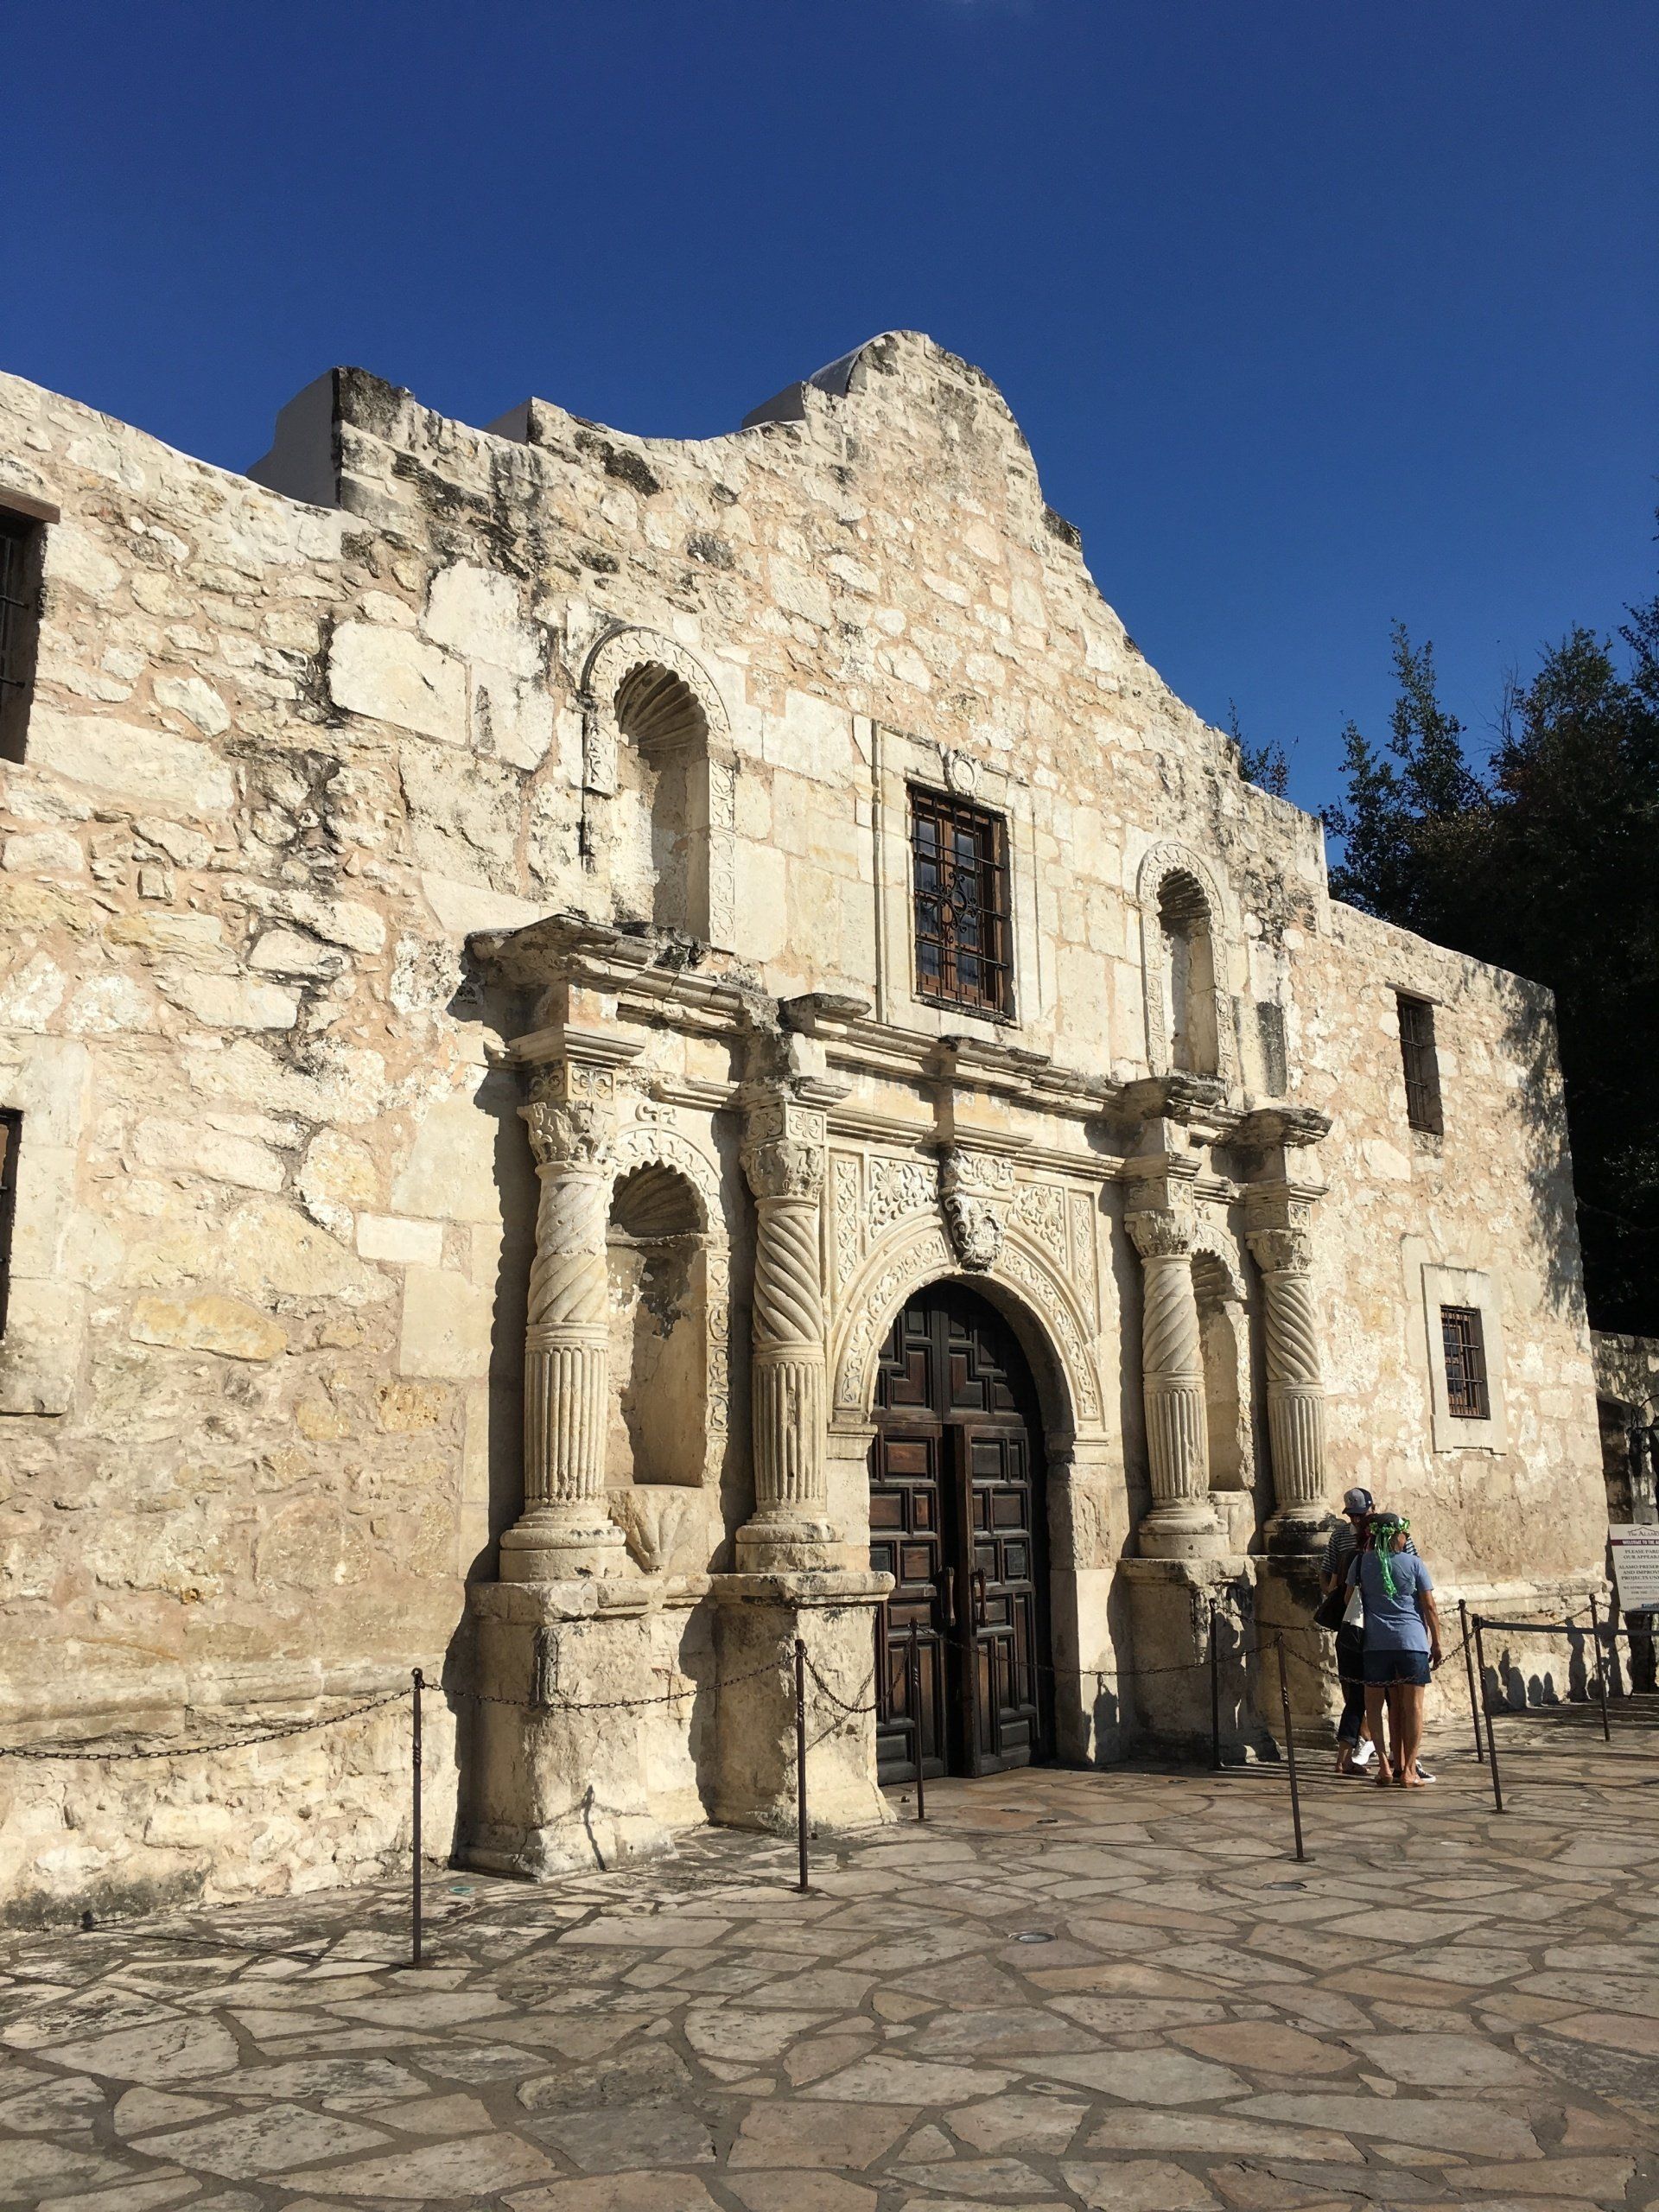 The Alamo in San Antonio, Tx